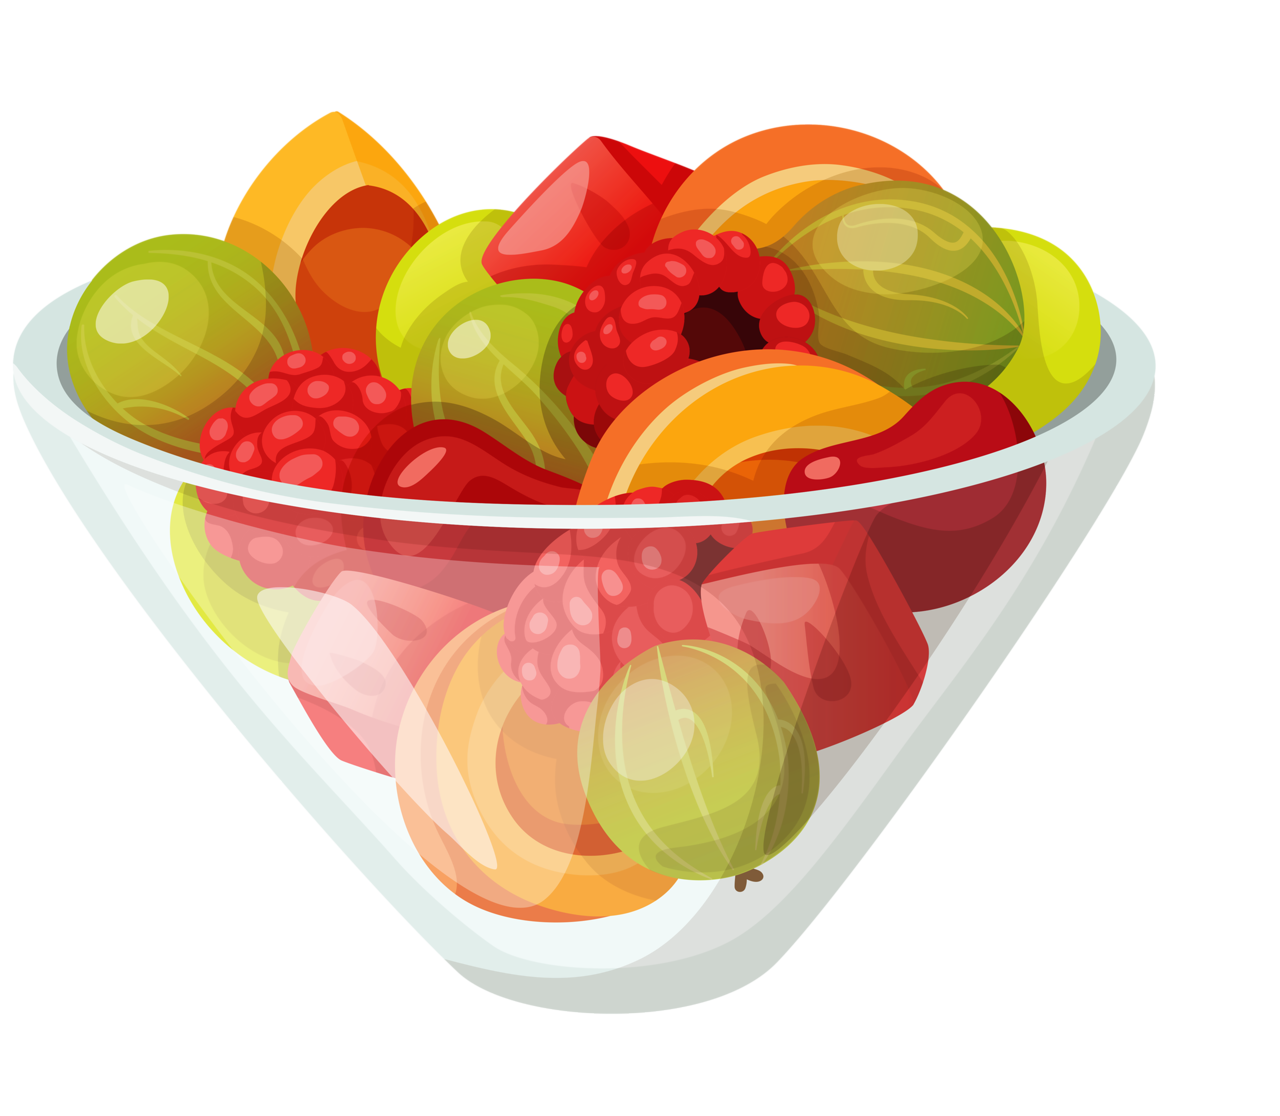 Fruit Salad Transparent Image